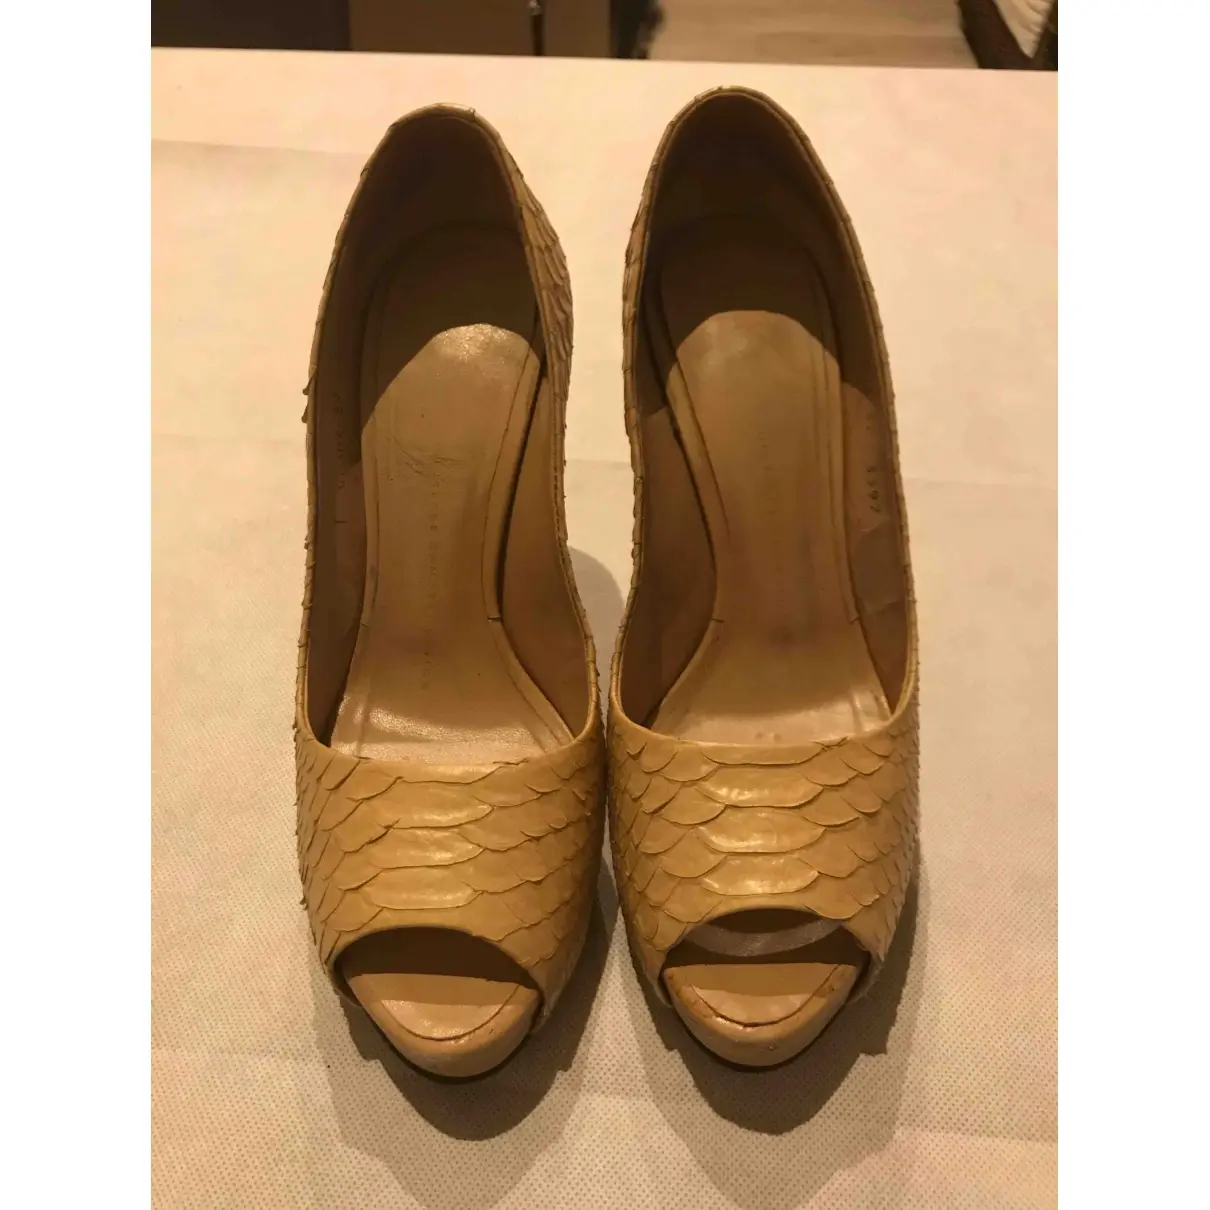 Giuseppe Zanotti Python heels for sale